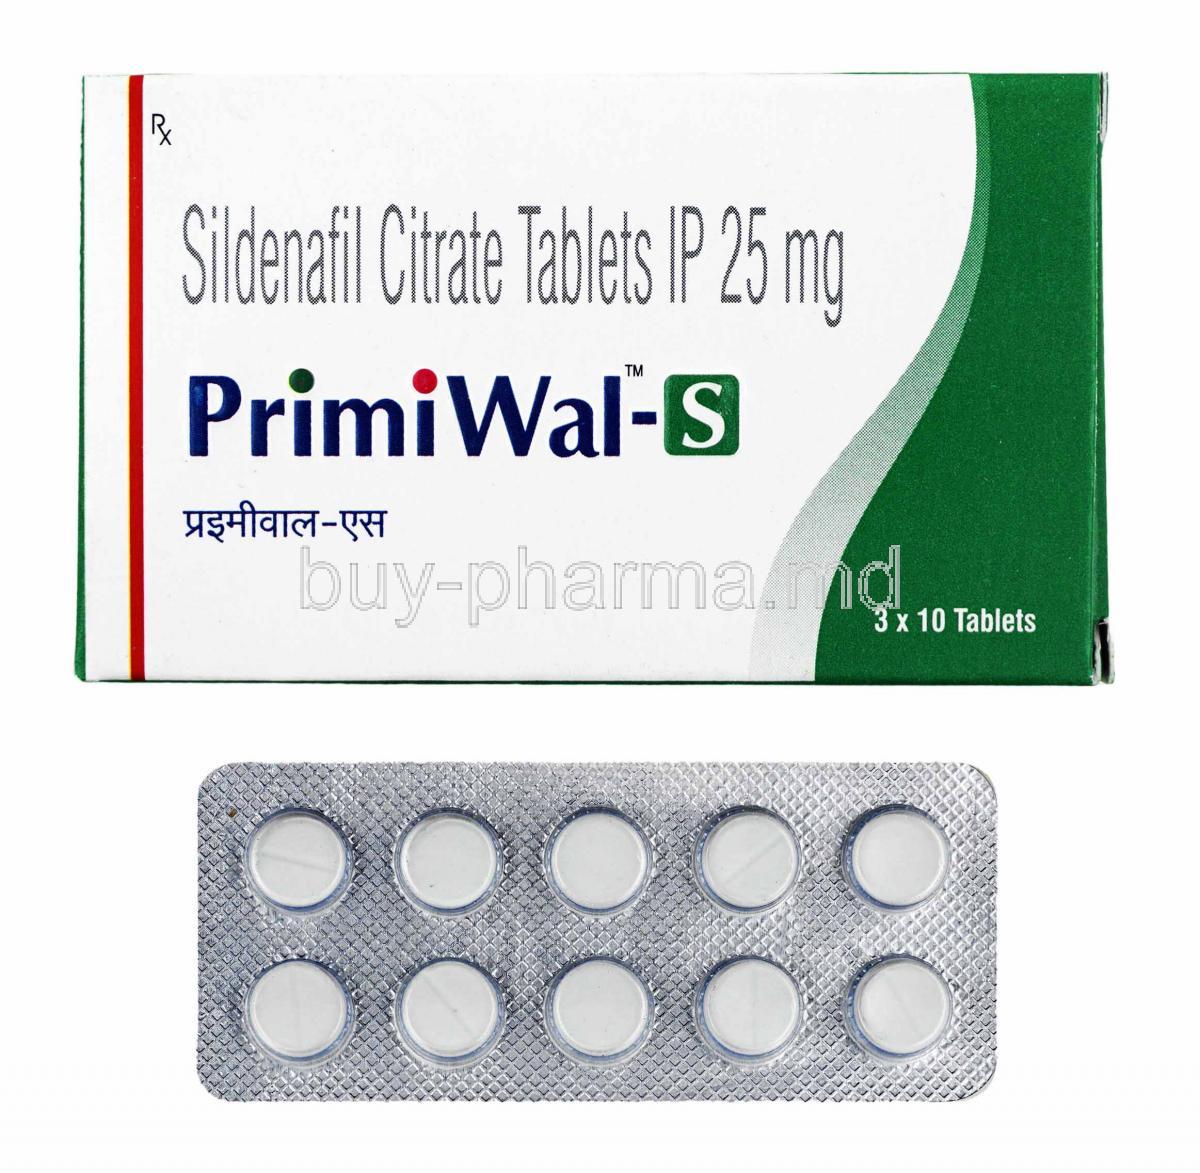 Primiwal-S, Sildenafil 25mg box and tablets